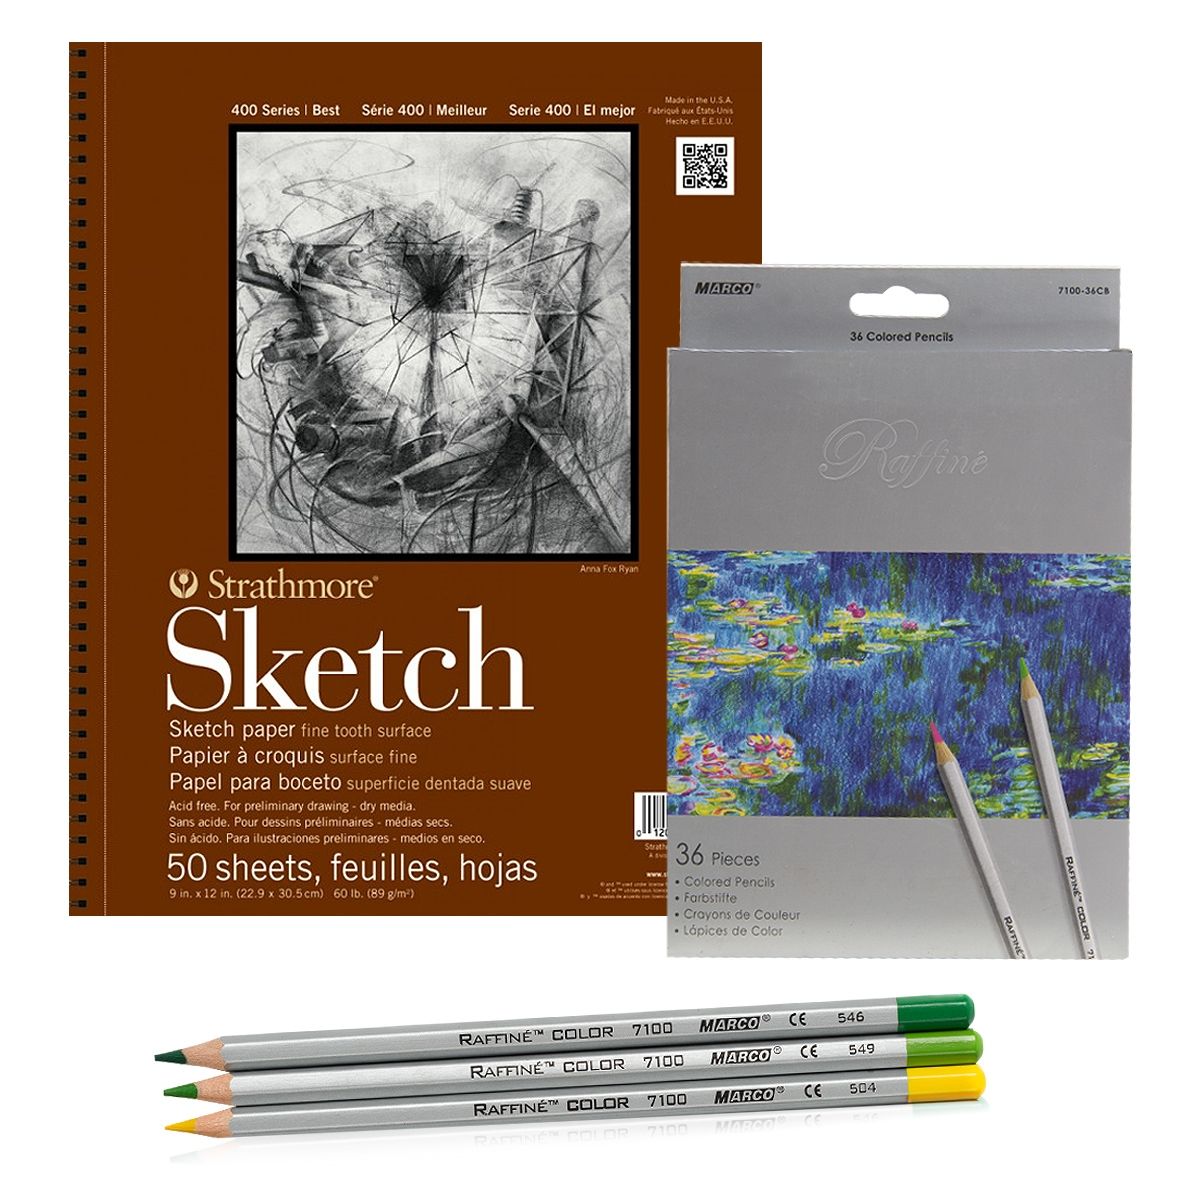 https://www.jerrysartarama.com/media/catalog/product/cache/ecb49a32eeb5603594b082bd5fe65733/s/t/strathmore400series-9x12-sketchpadset-raffine-36-colored-pencils-90412.jpg